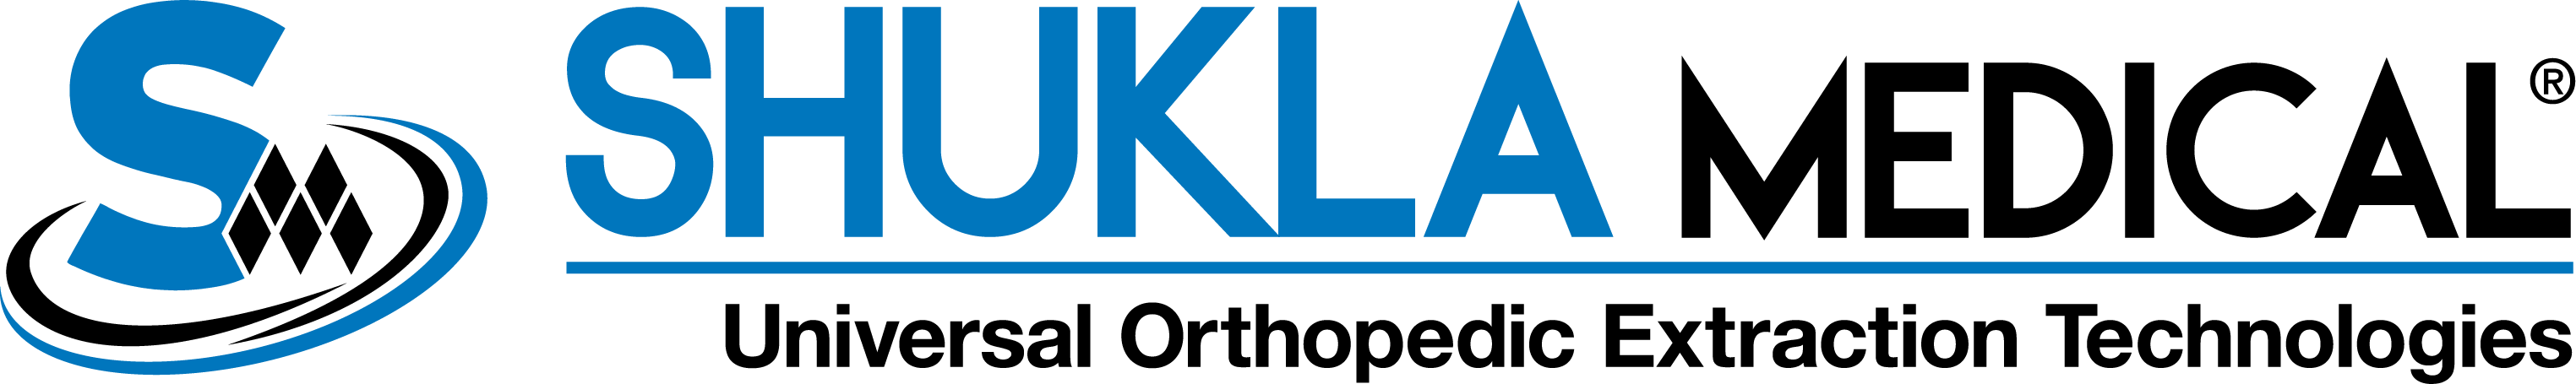 Shukla logo